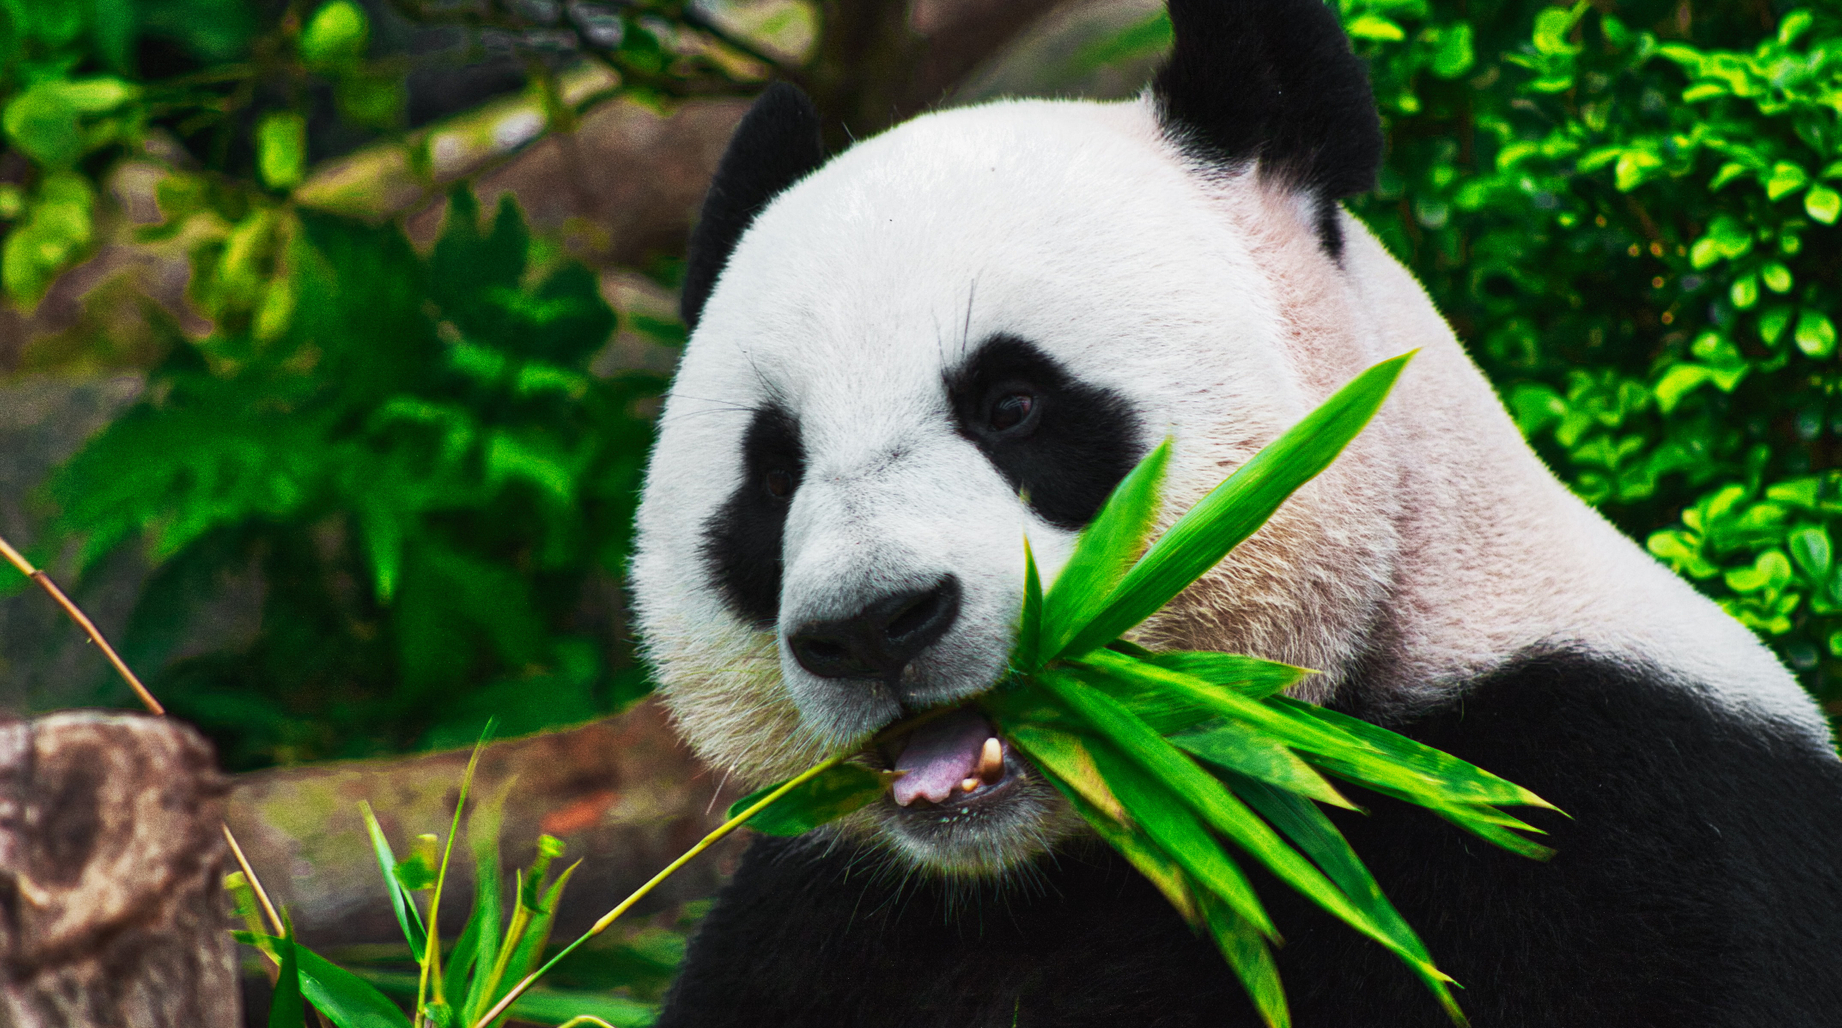 A panda bear eating bamboo leaves